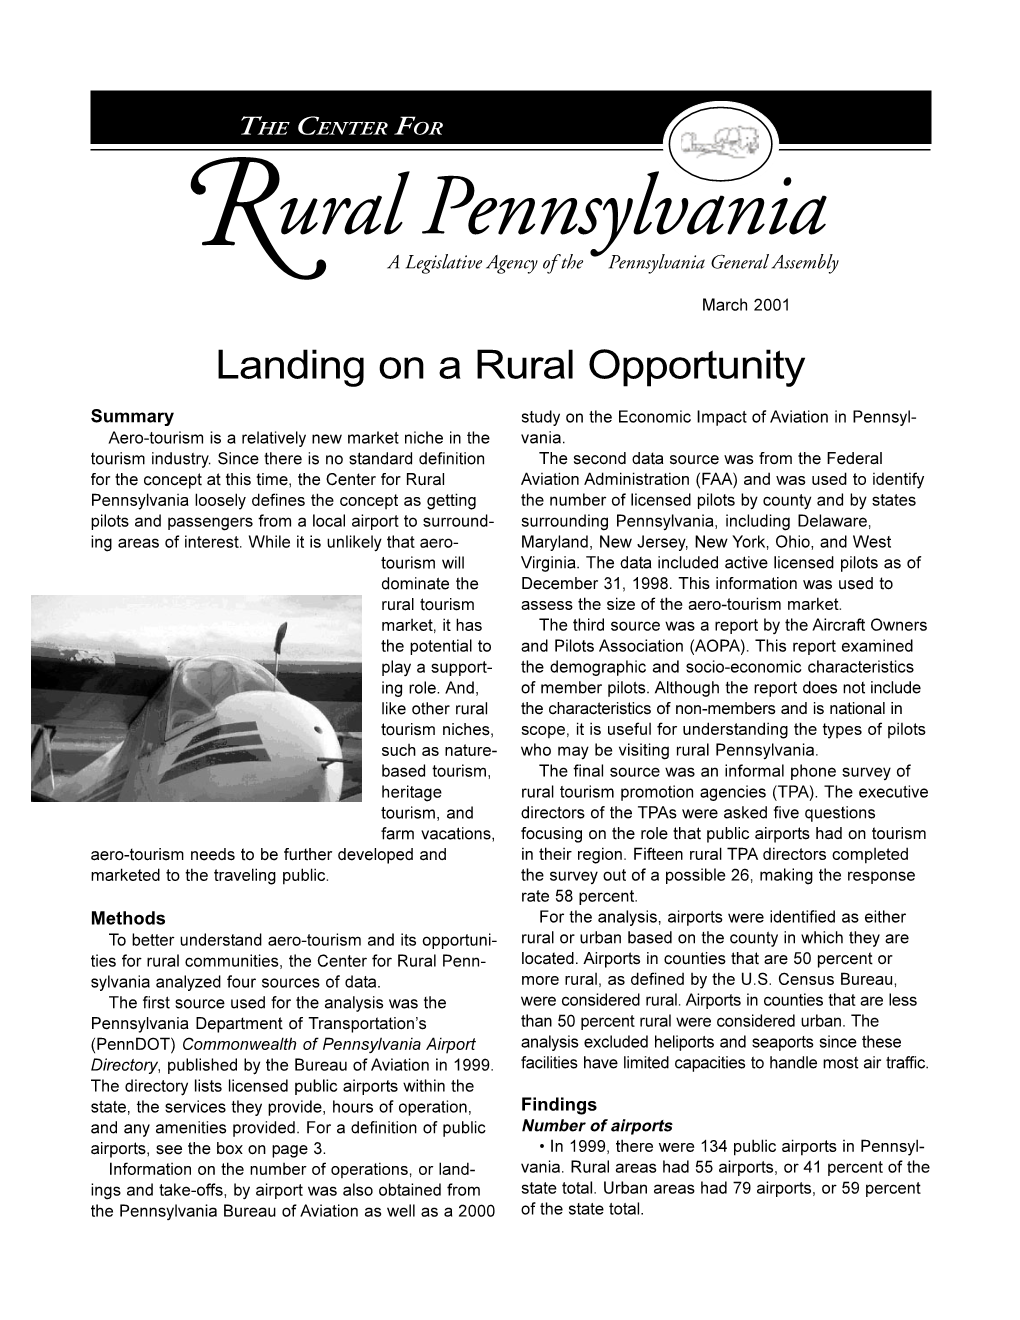 The Center for Rural Pennsylvania